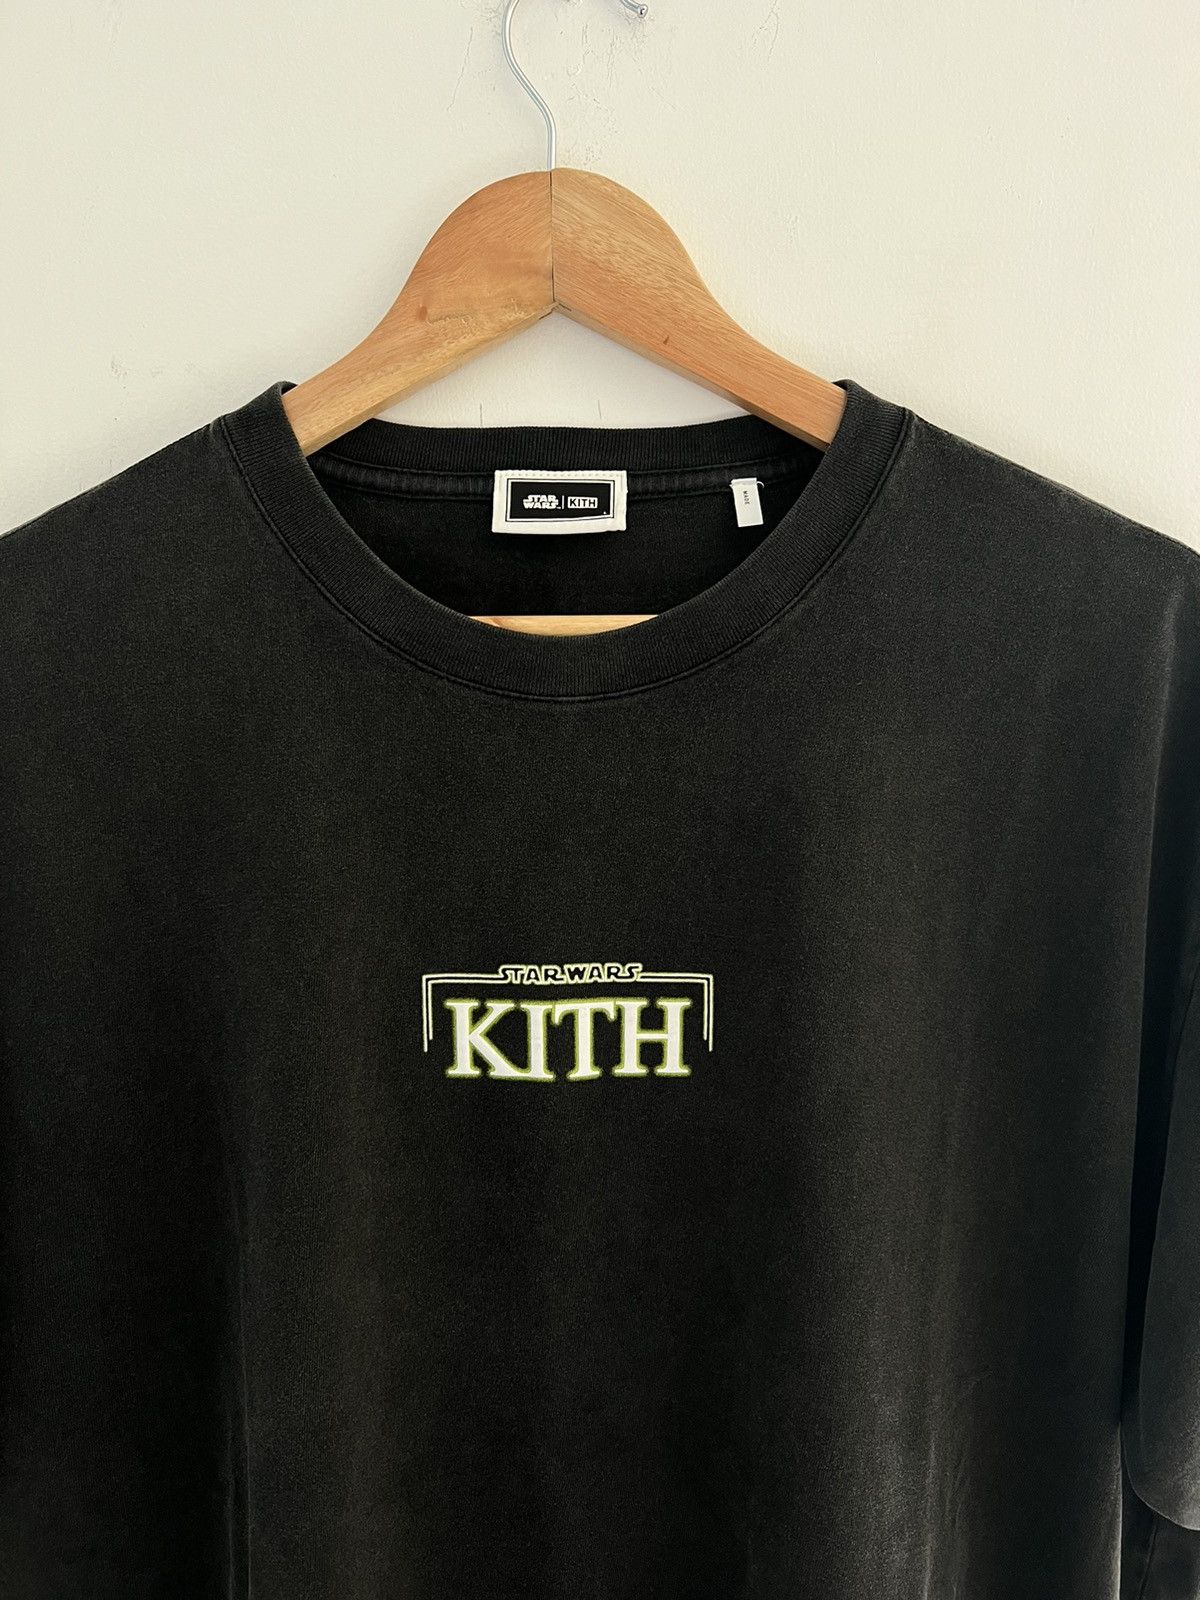 Kith Kith x STAR WARS Green Glow Vintage Tee | Grailed